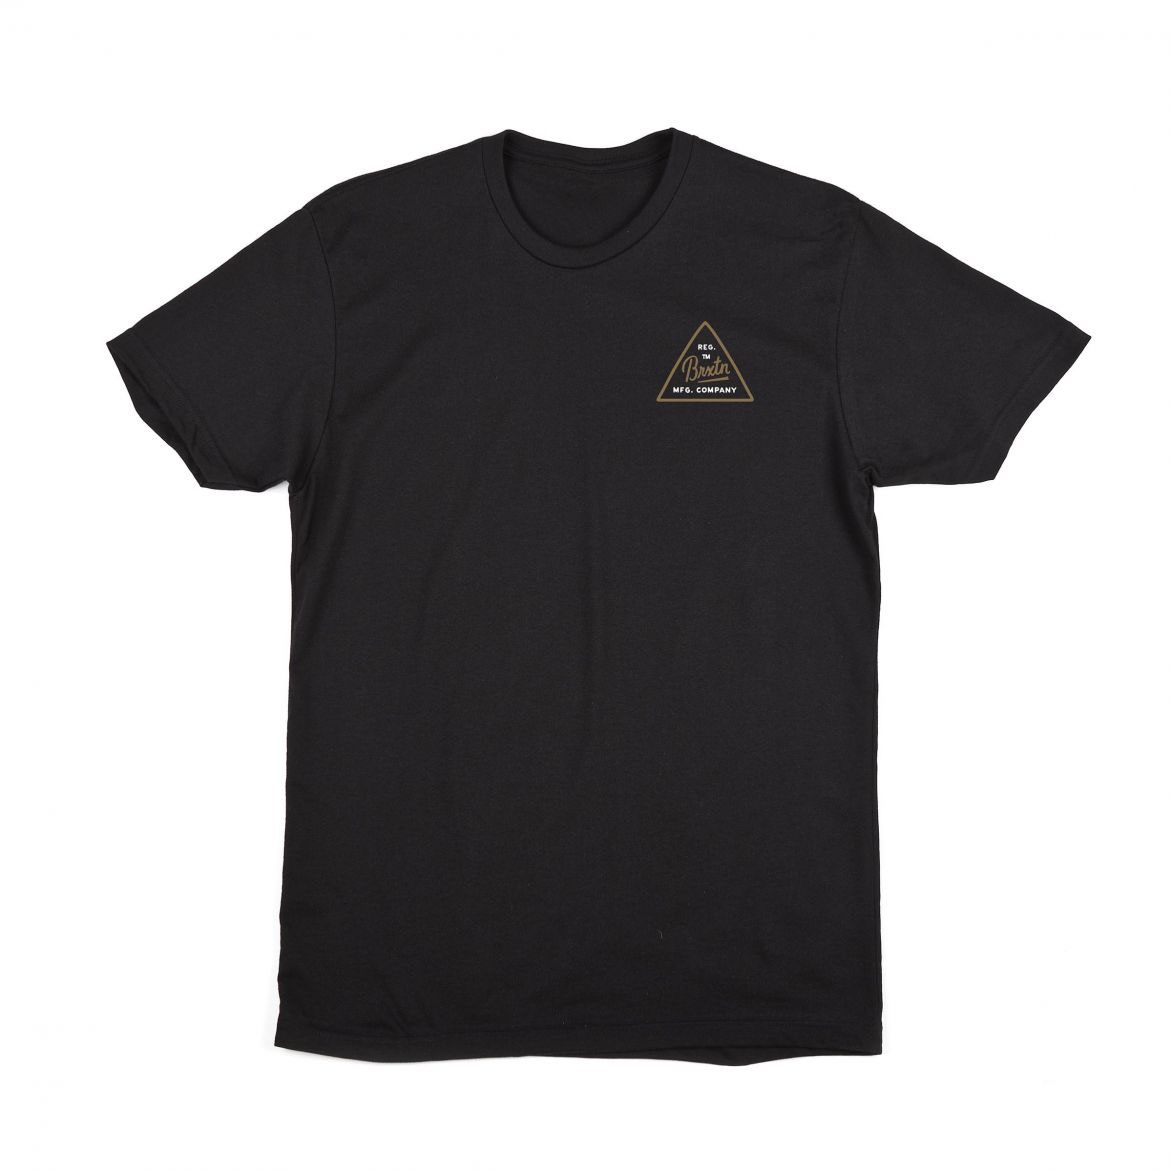 Cue Shirt by Brixton- BLACK (Sale price!)